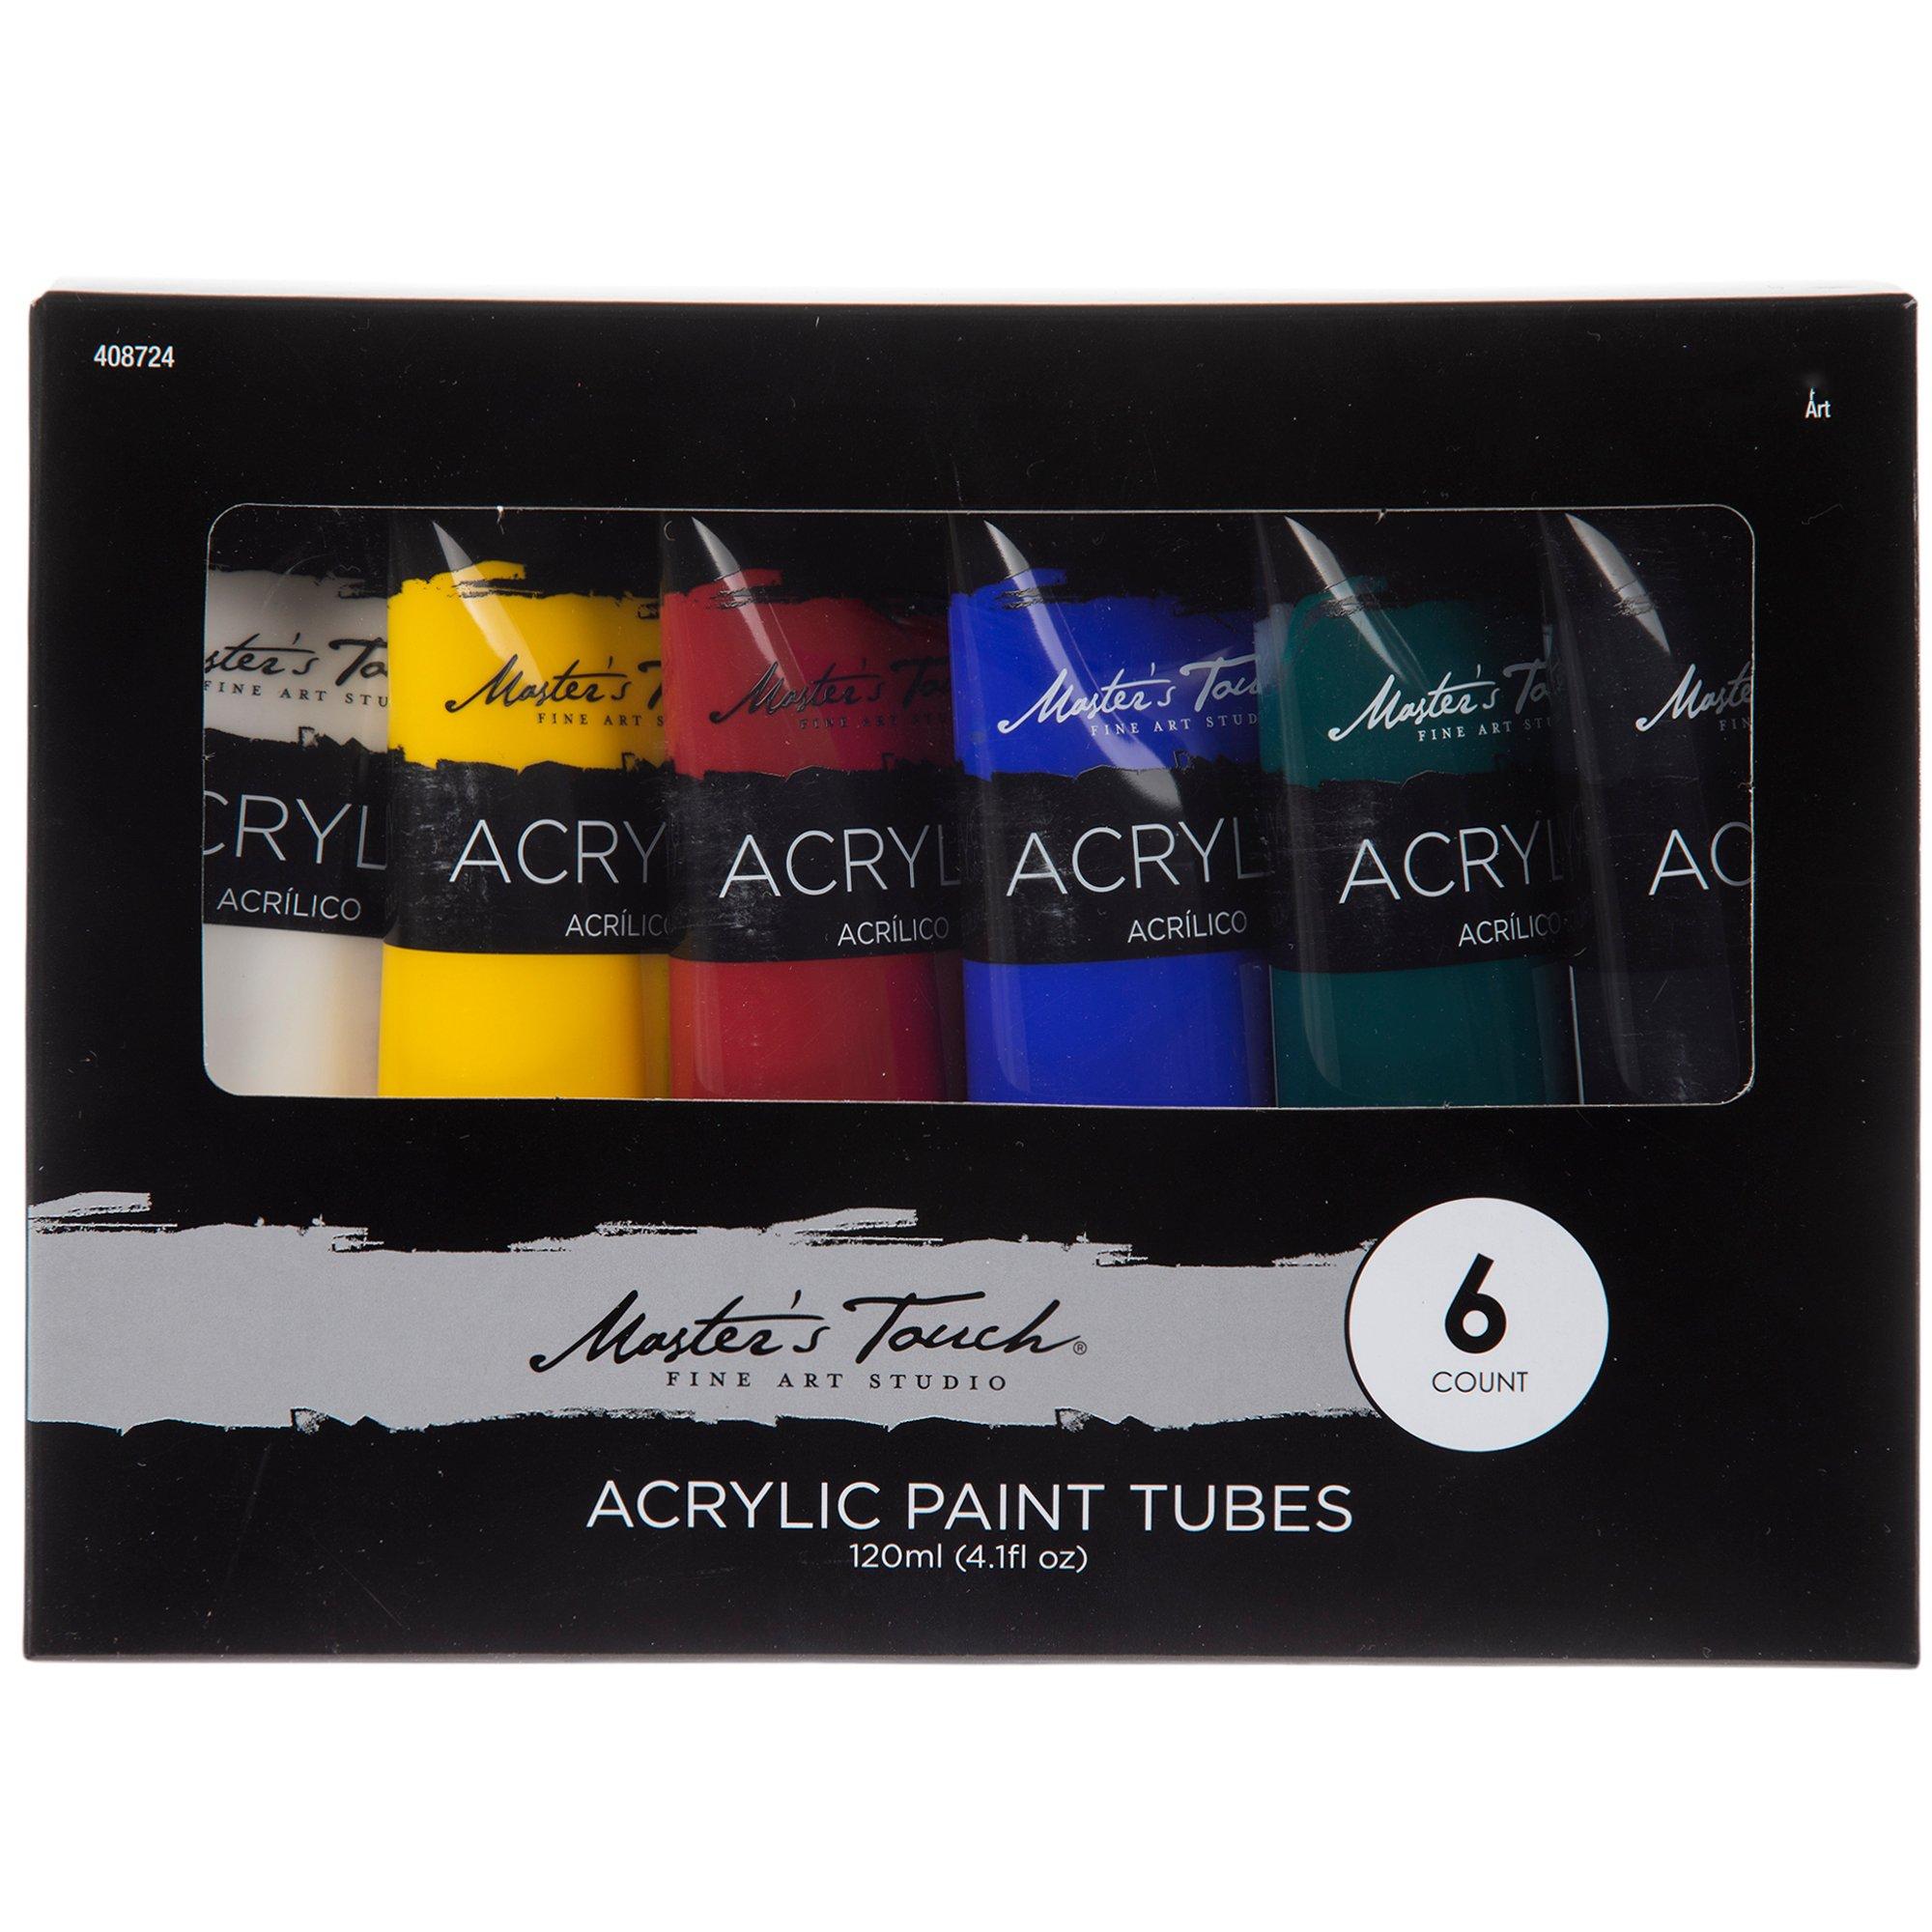 Master's Touch Acrylic Paint, Hobby Lobby, 337584